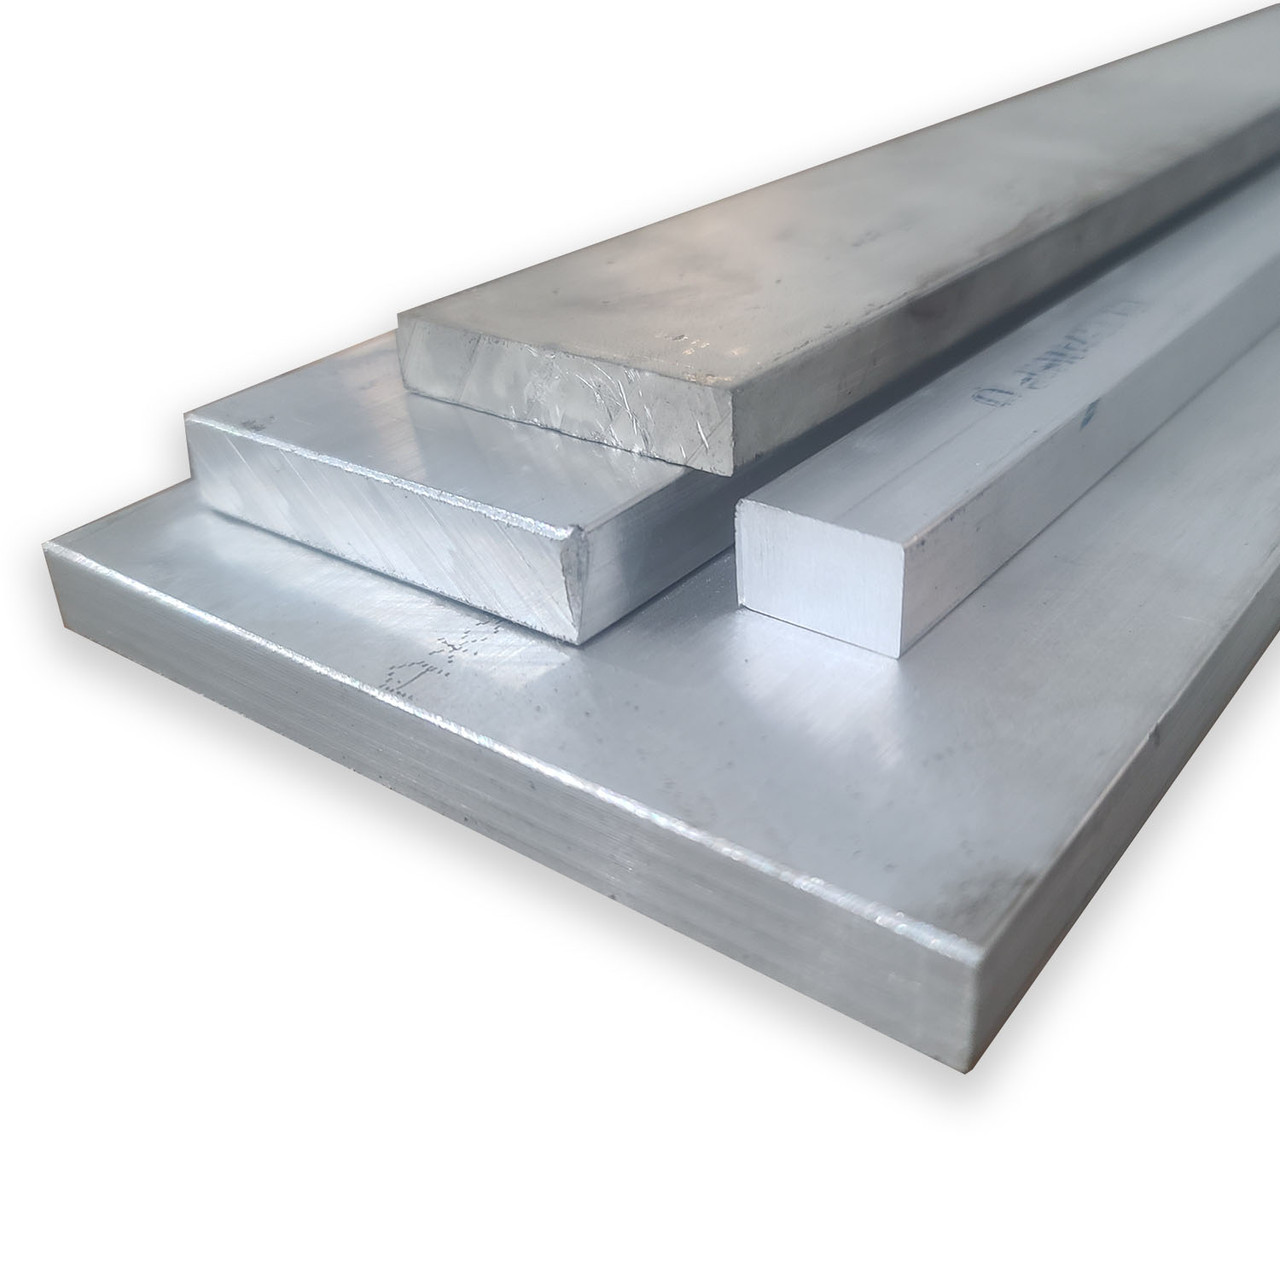 0.500" x 1.5" x 18", 6061-T6511 Aluminum Flat Bar